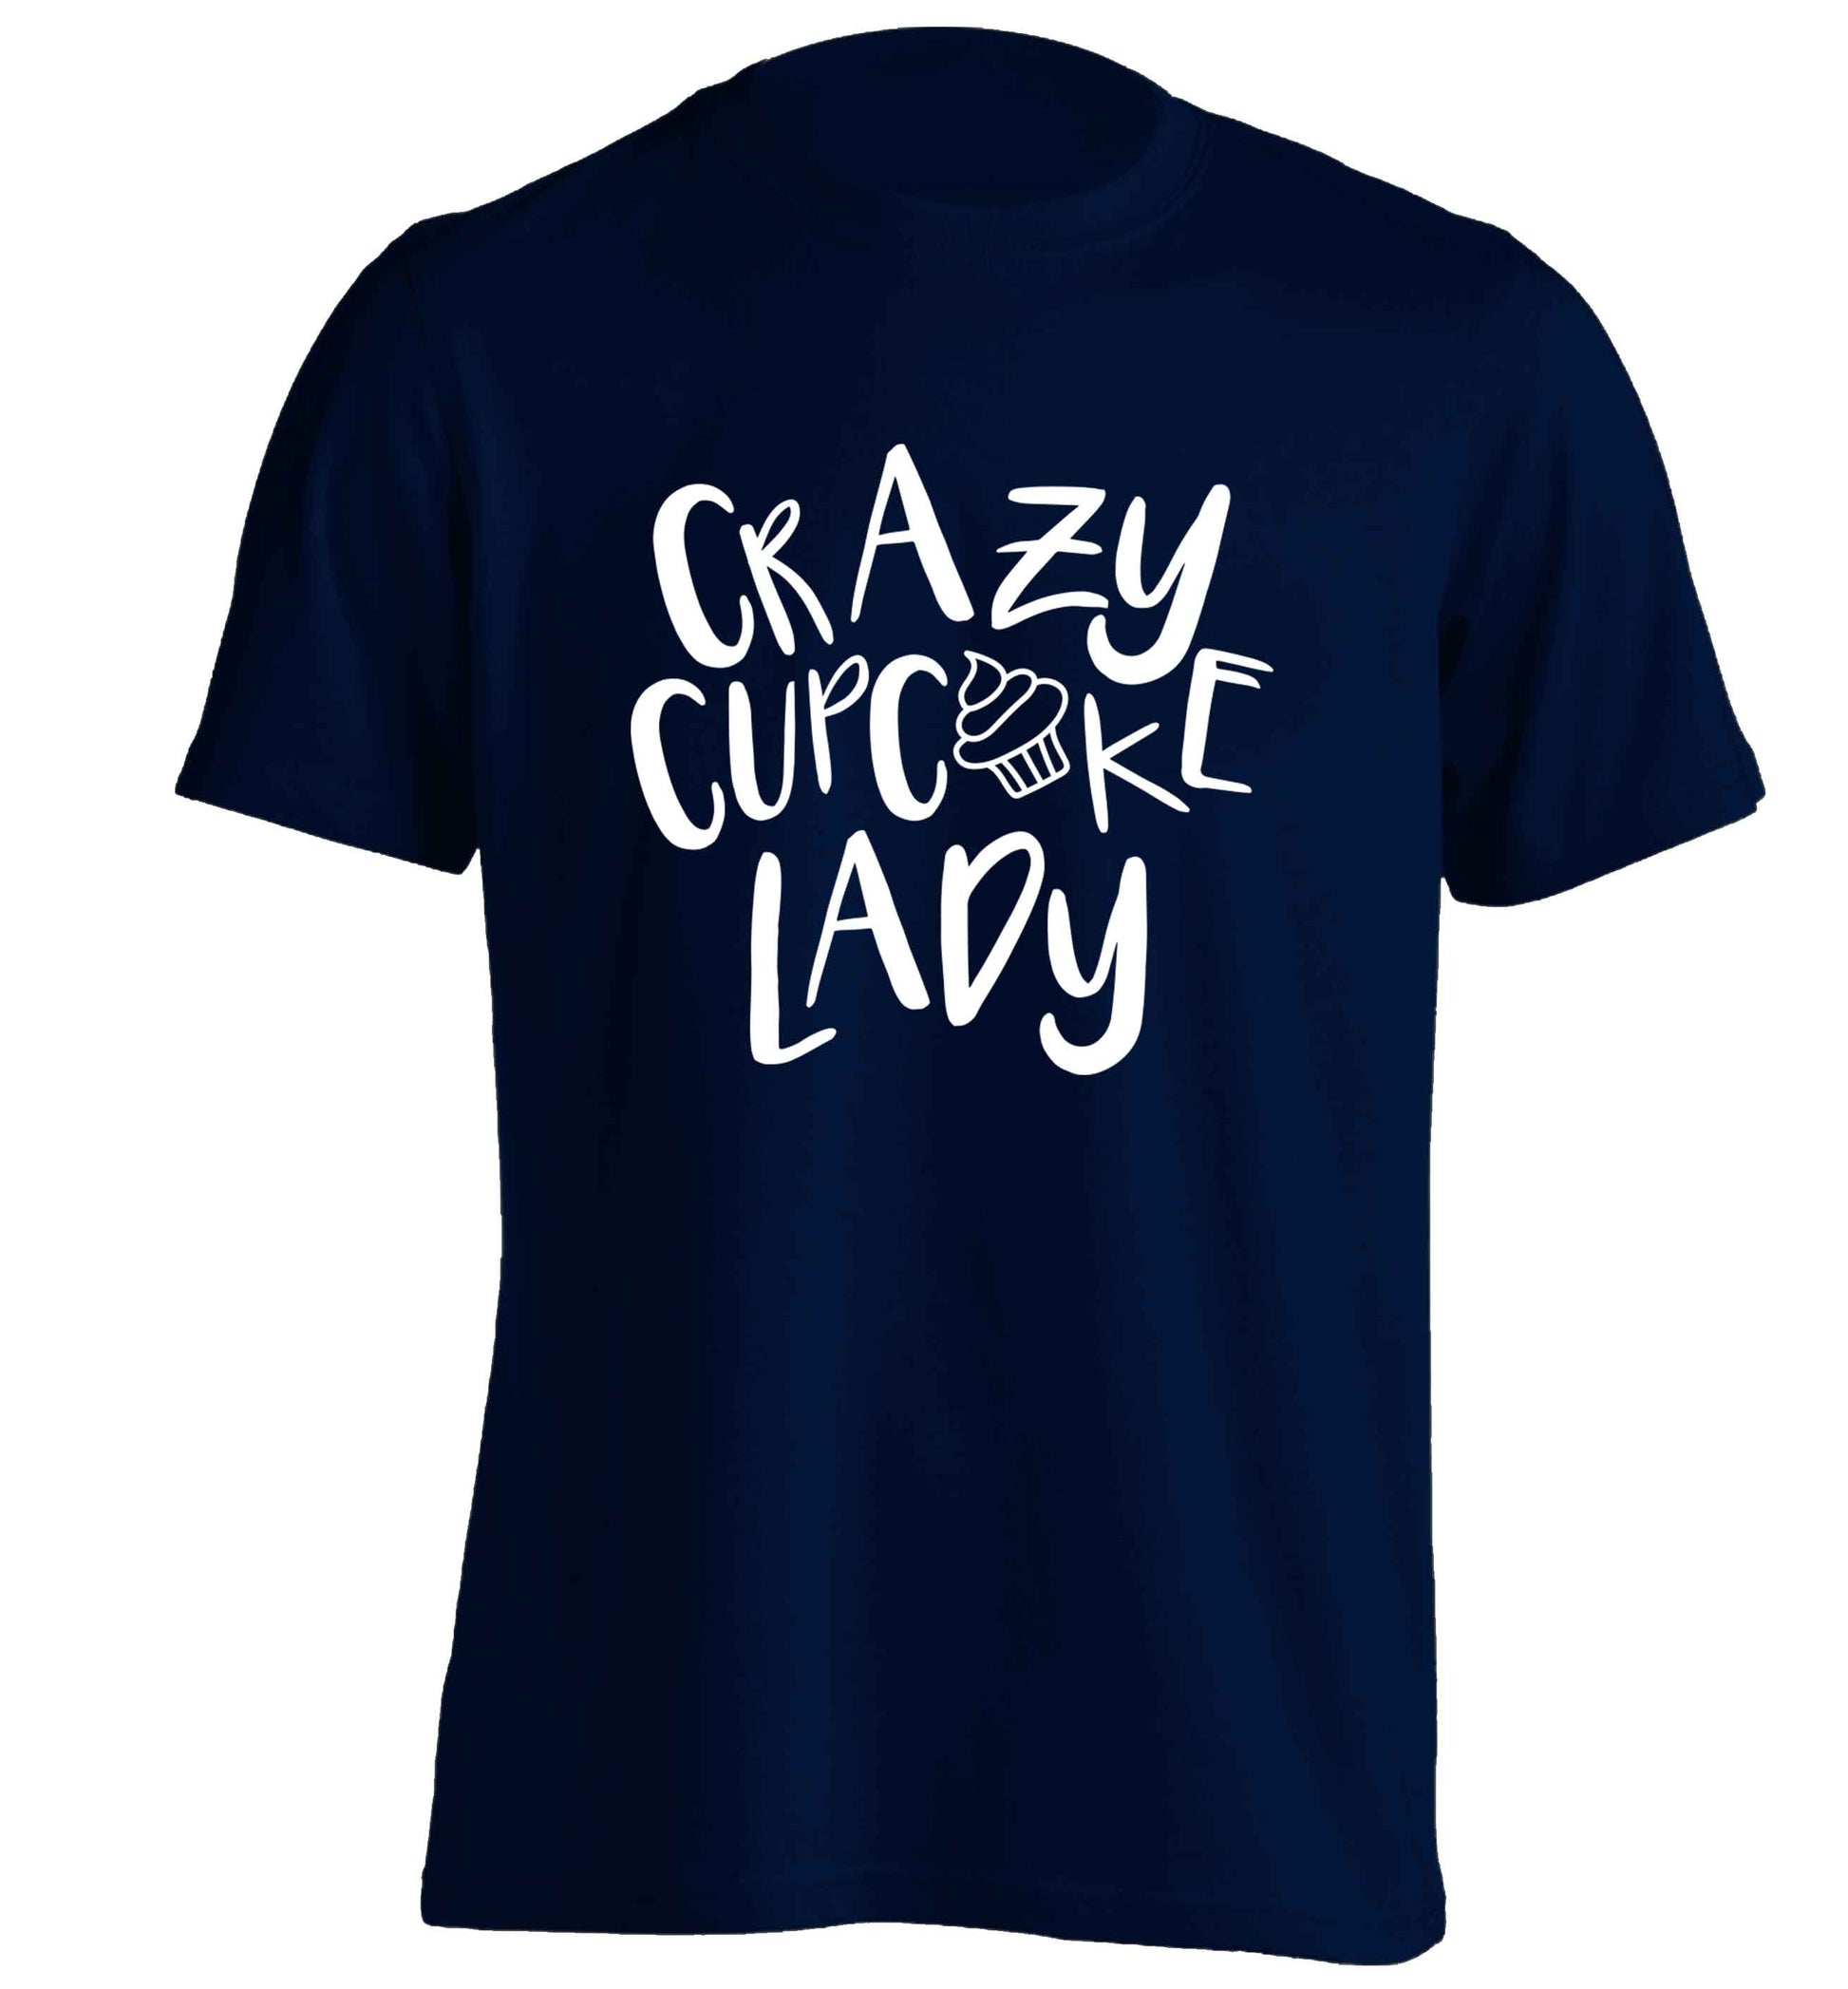 Crazy cupcake lady adults unisex navy Tshirt 2XL